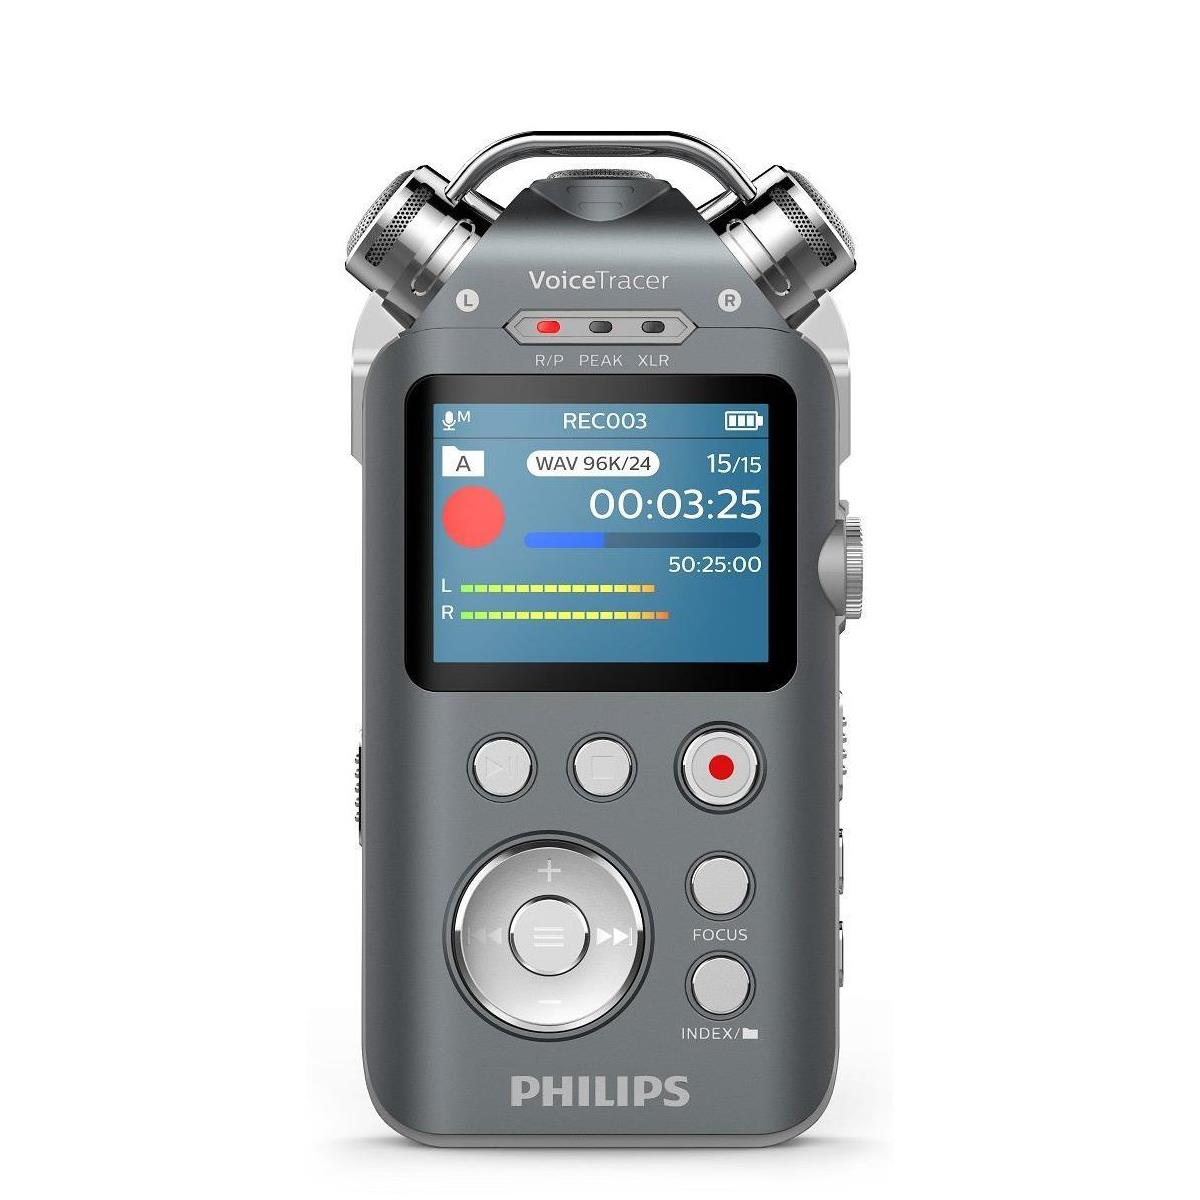 

Philips Audio Philips VoiceTracer DVT7500 Audio Recorder